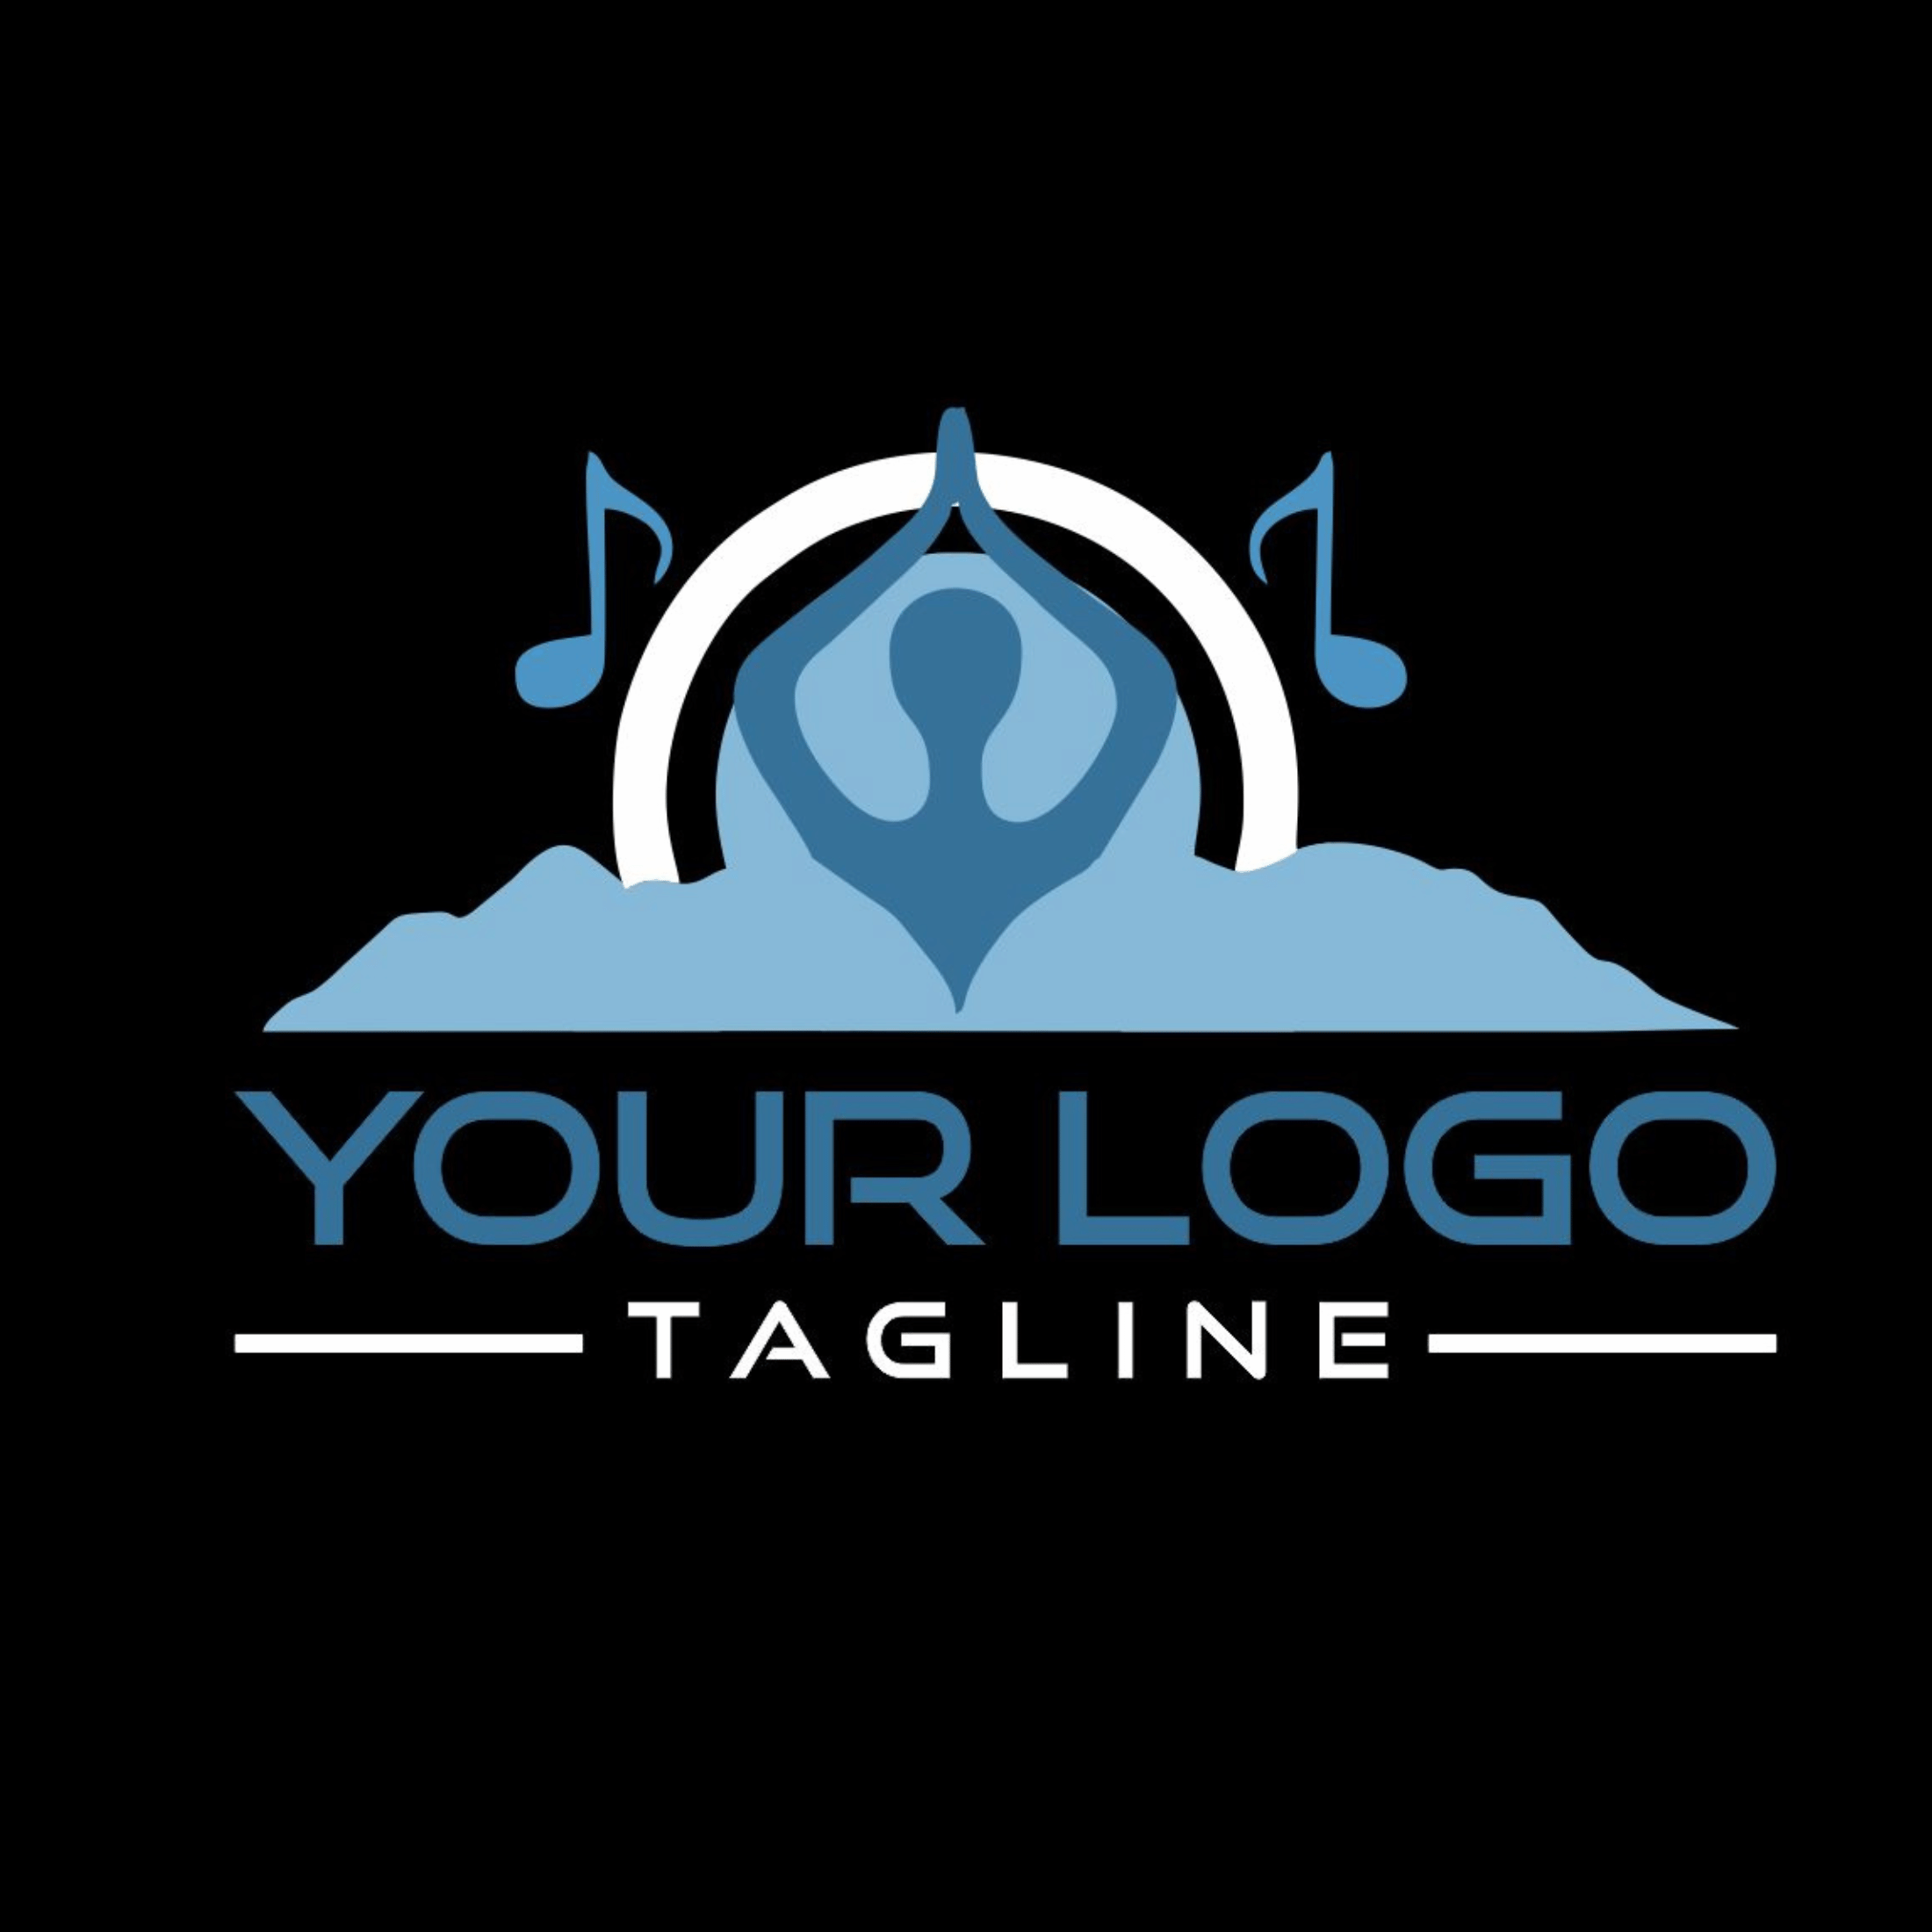 Yoga & Music Logo cover image.